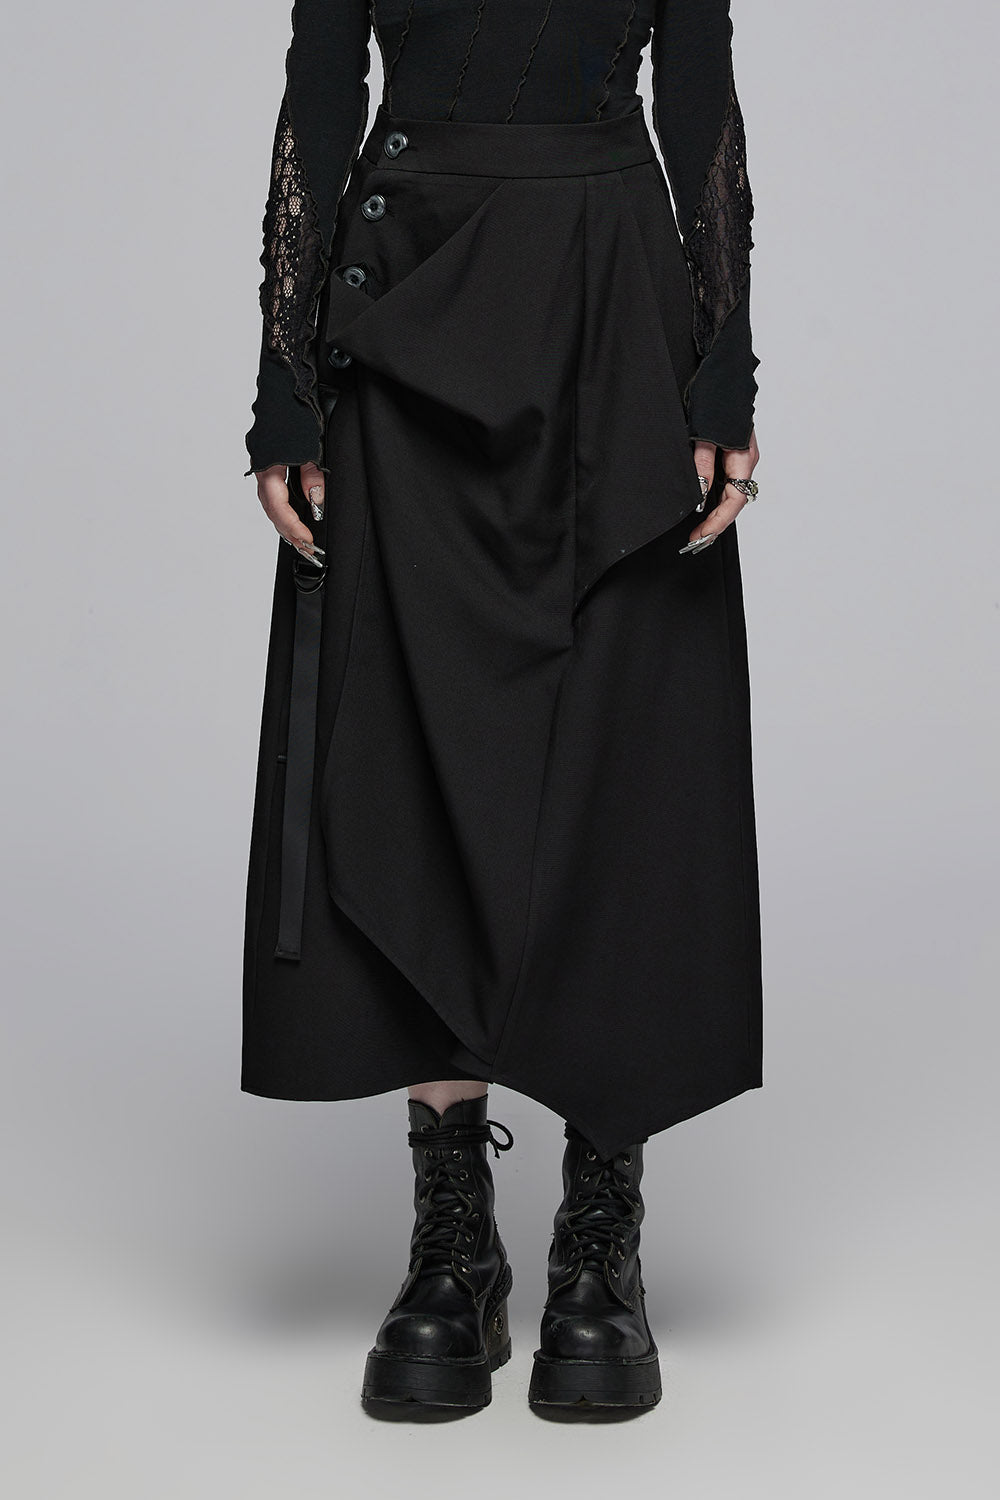 ruched long black maxi skirt